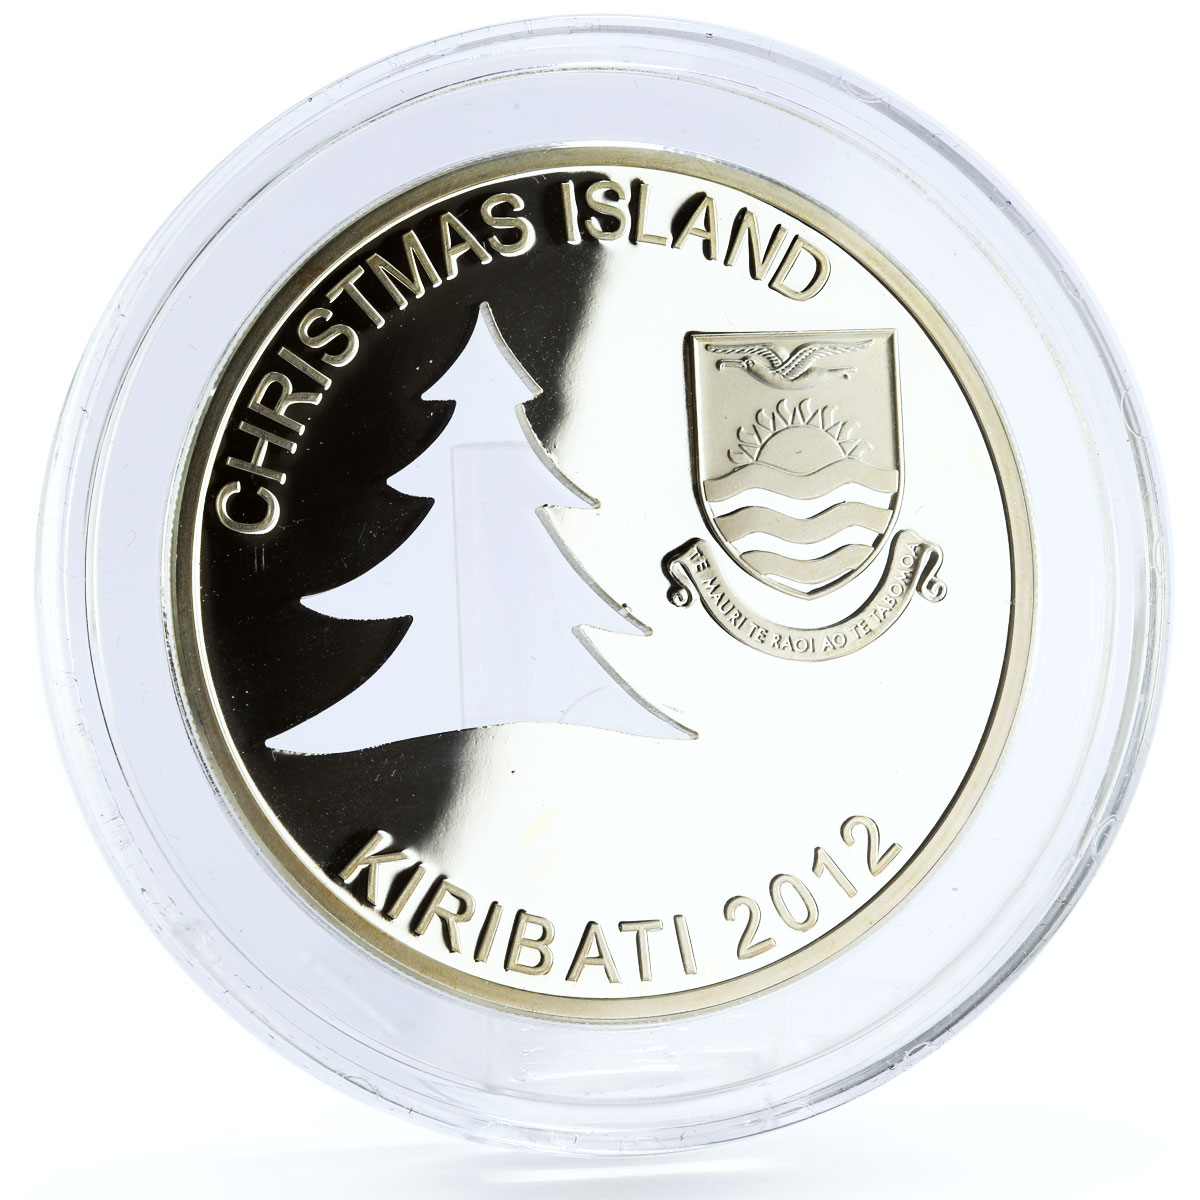 Kiribati 20 dollars Happy Holidays Merry Christmas Tree proof silver coin 2012